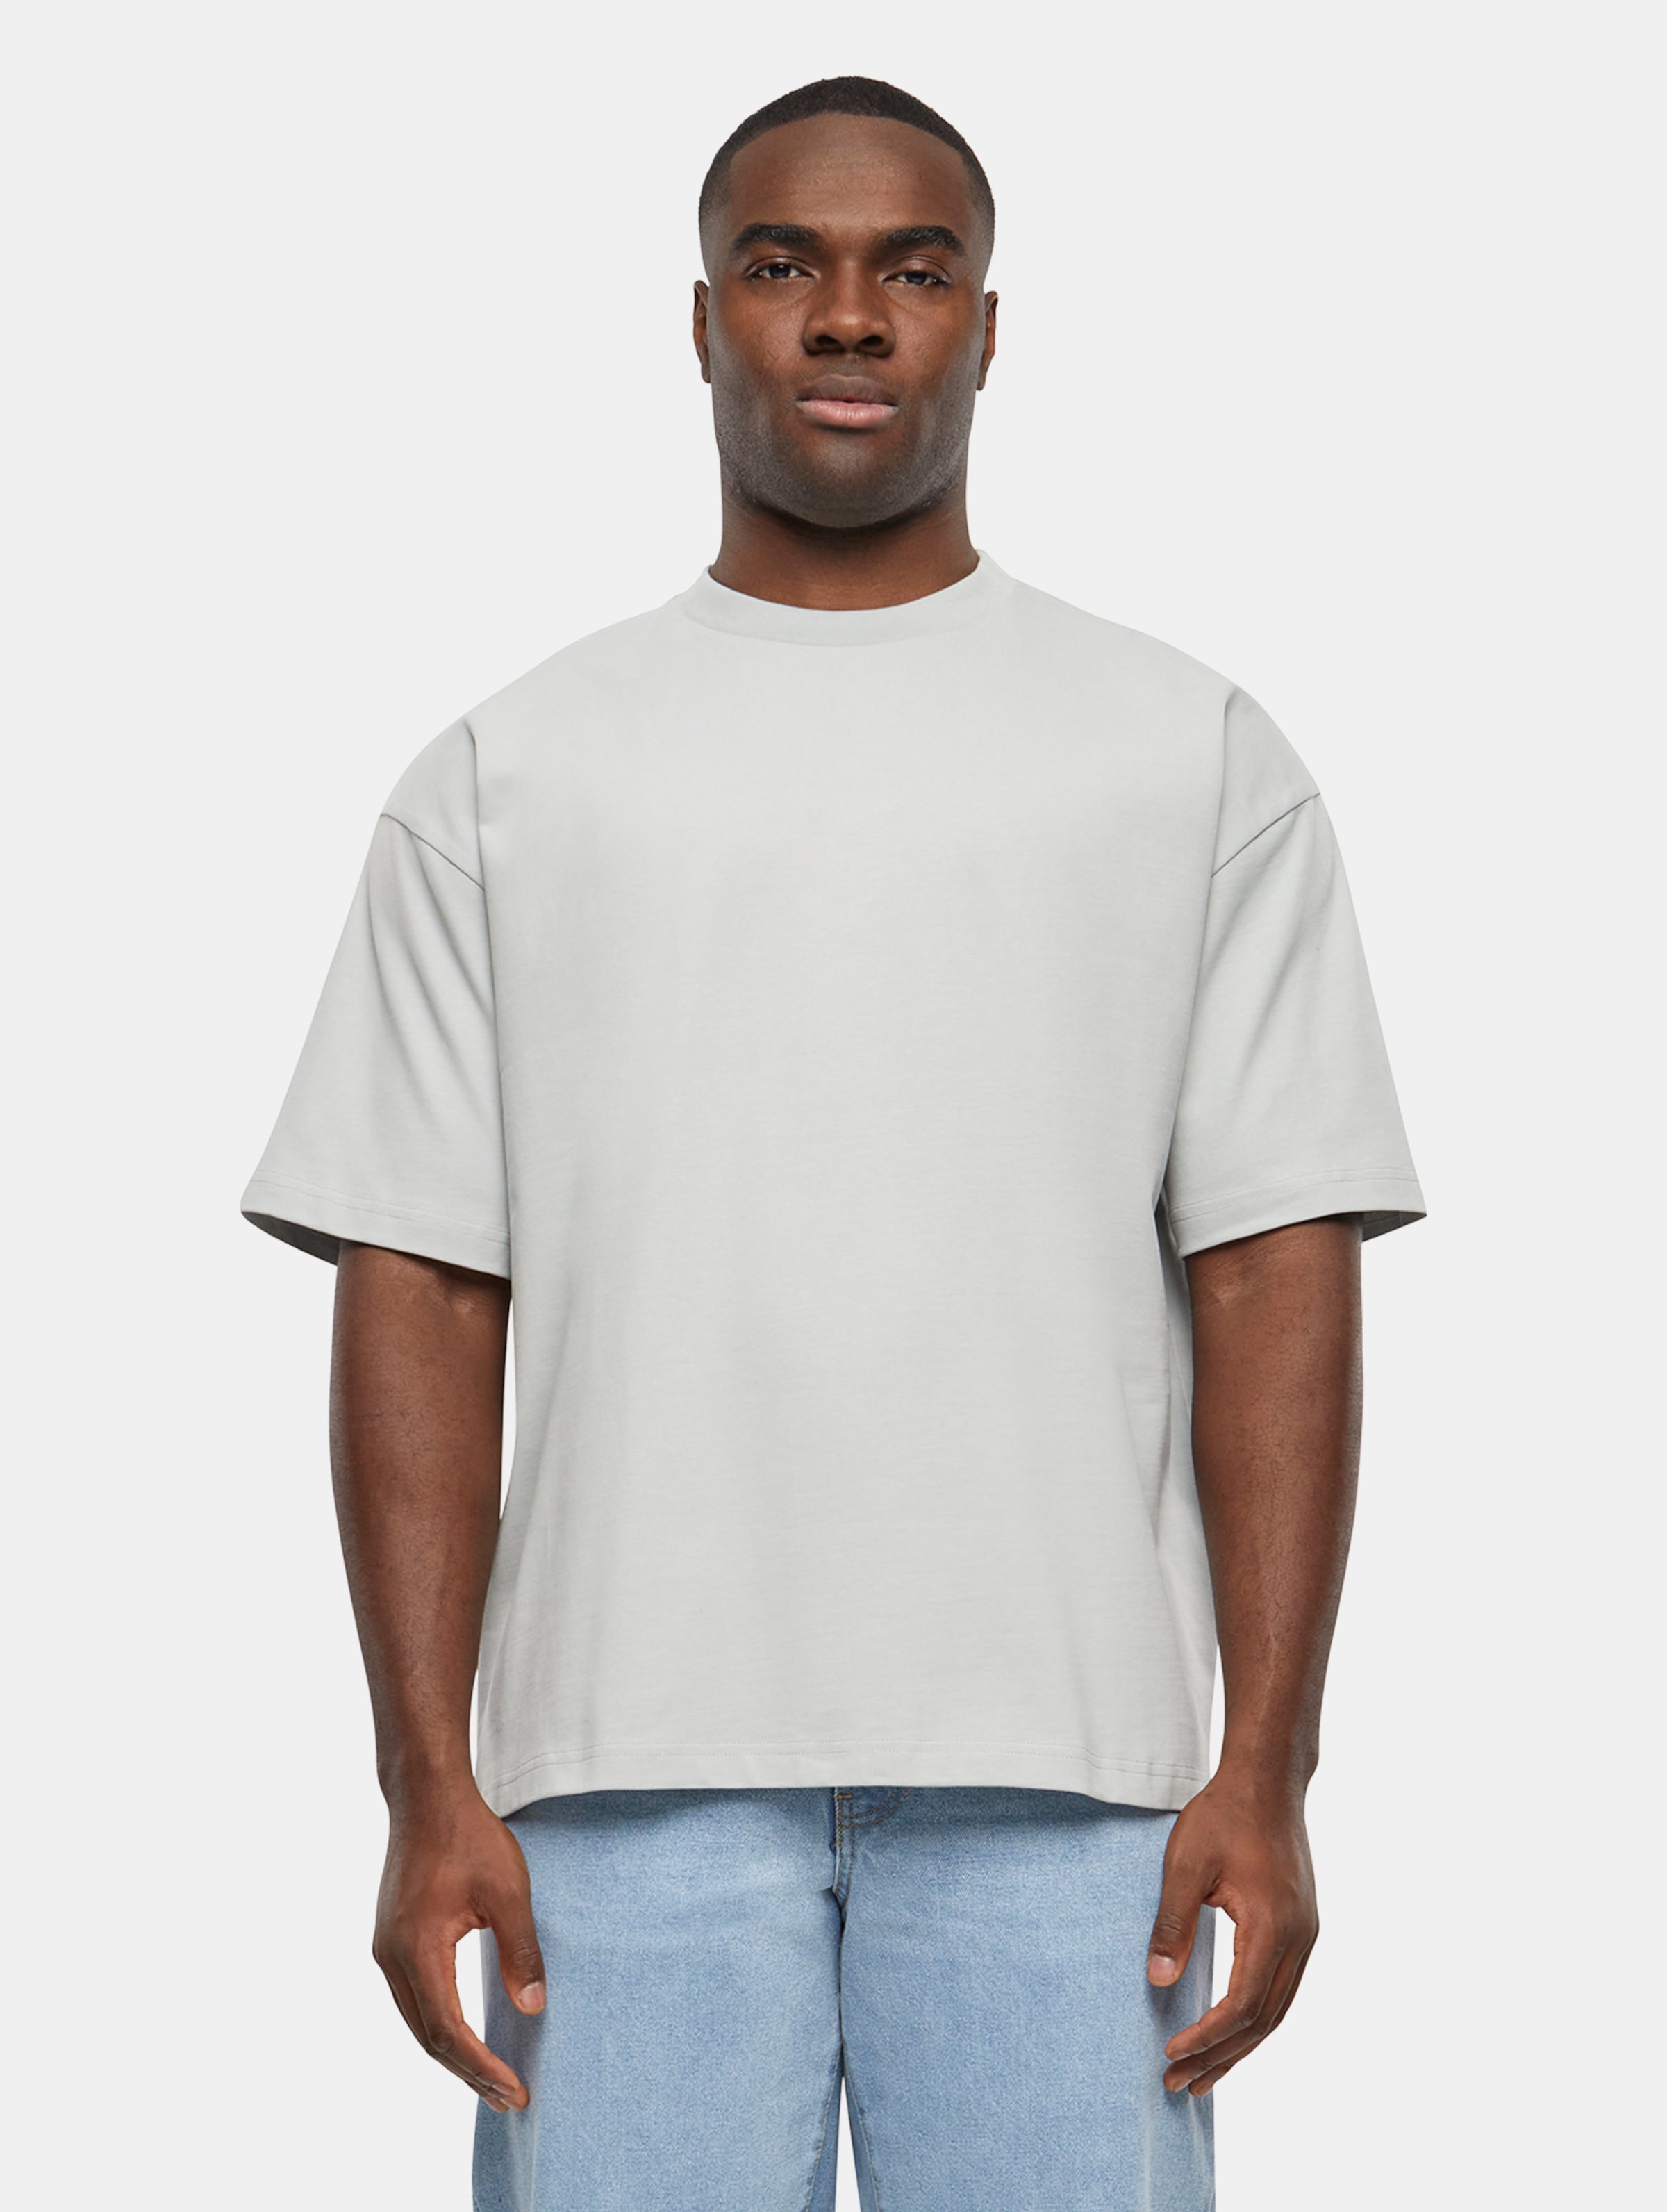 Prohibited Oversized T-Shirts Männer,Unisex op kleur grijs, Maat L